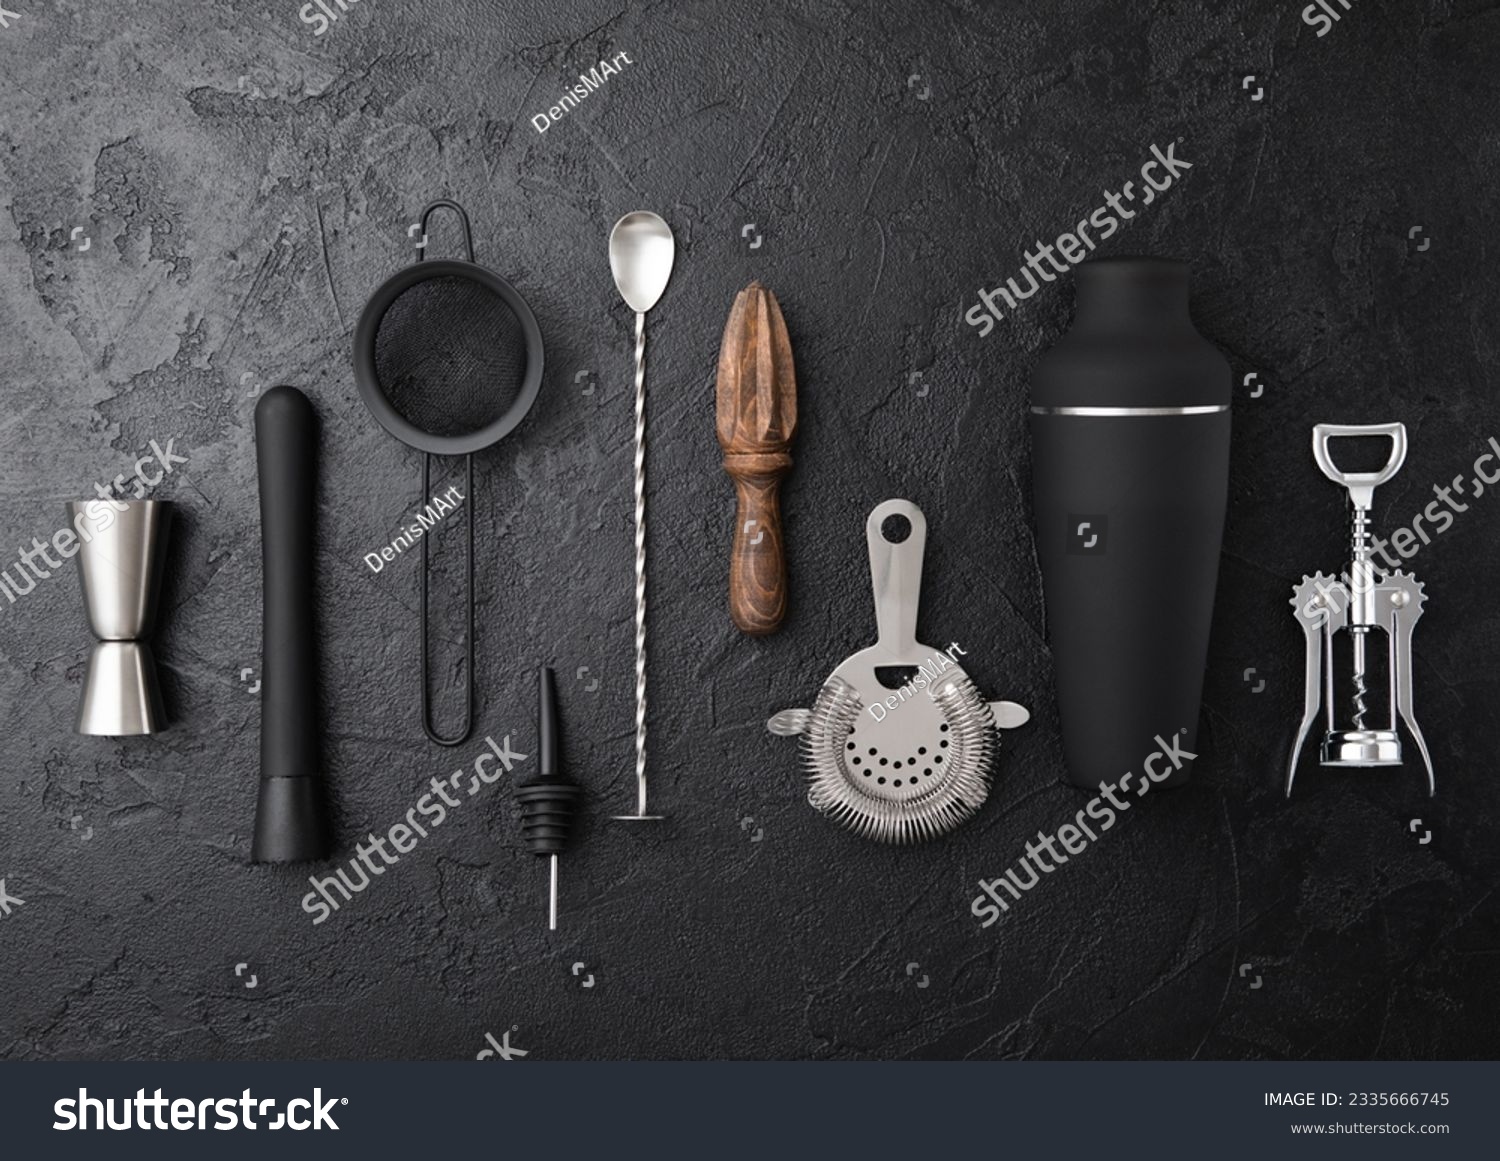 Cocktail utensils black matt steel set on black board background..Shaker,wine opener,spoon,strainer,muddler and jigger with wooden manual juicer. #2335666745